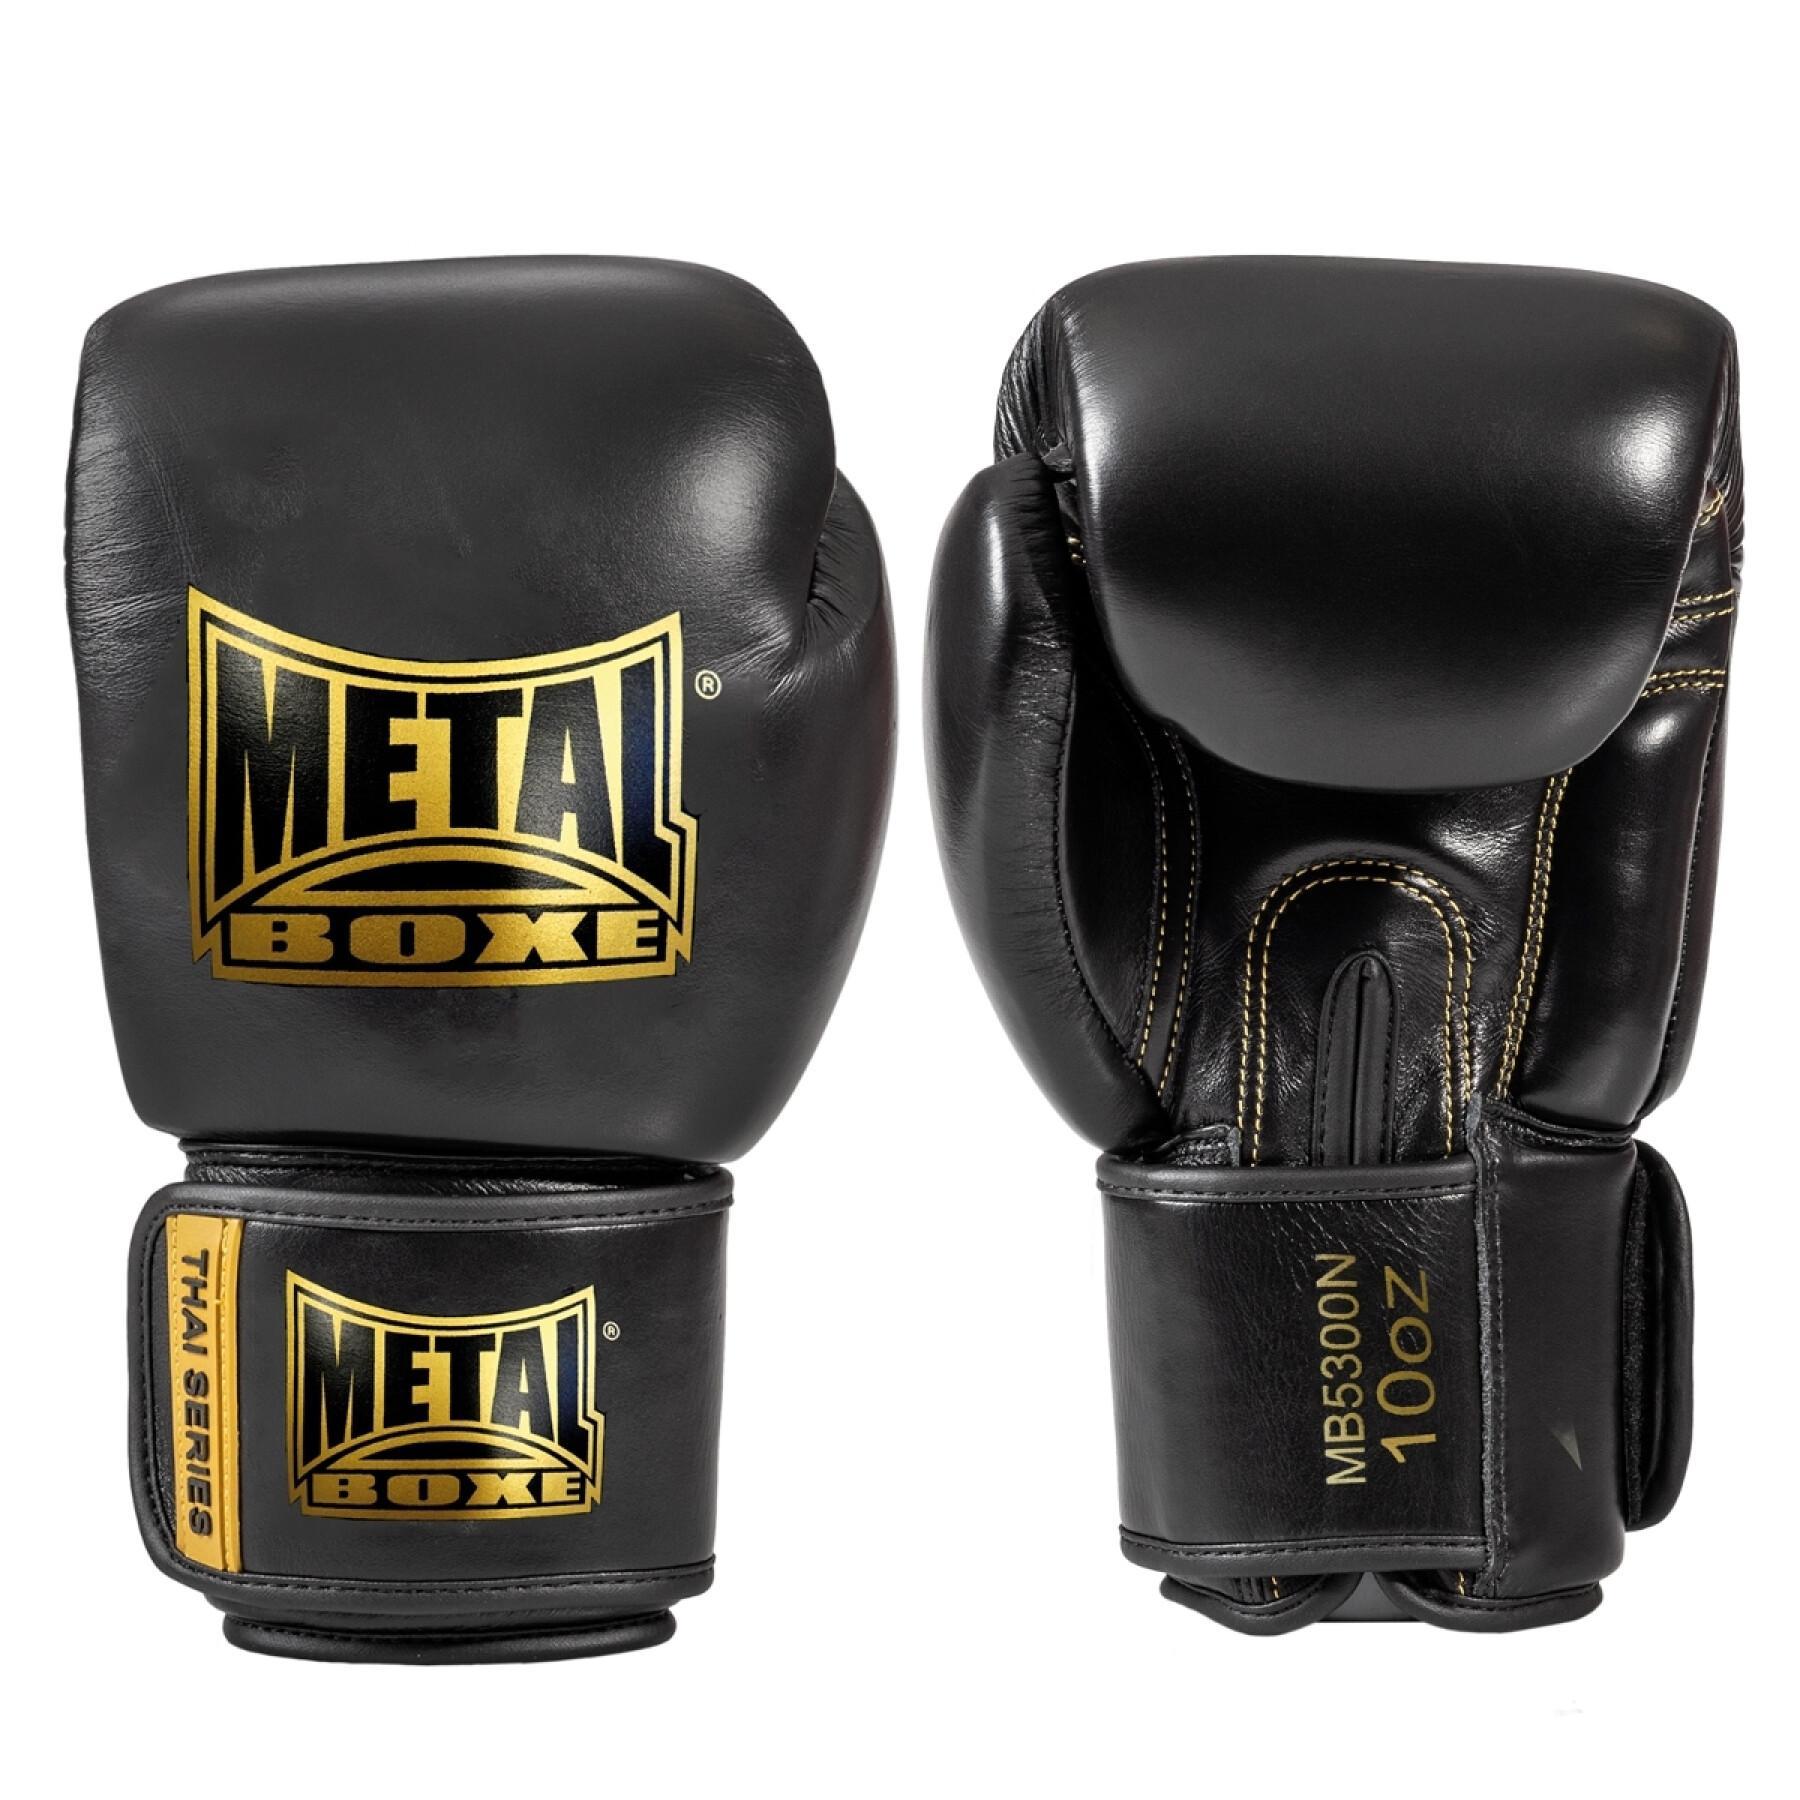 Leather boxing gloves Metal Boxe thai series